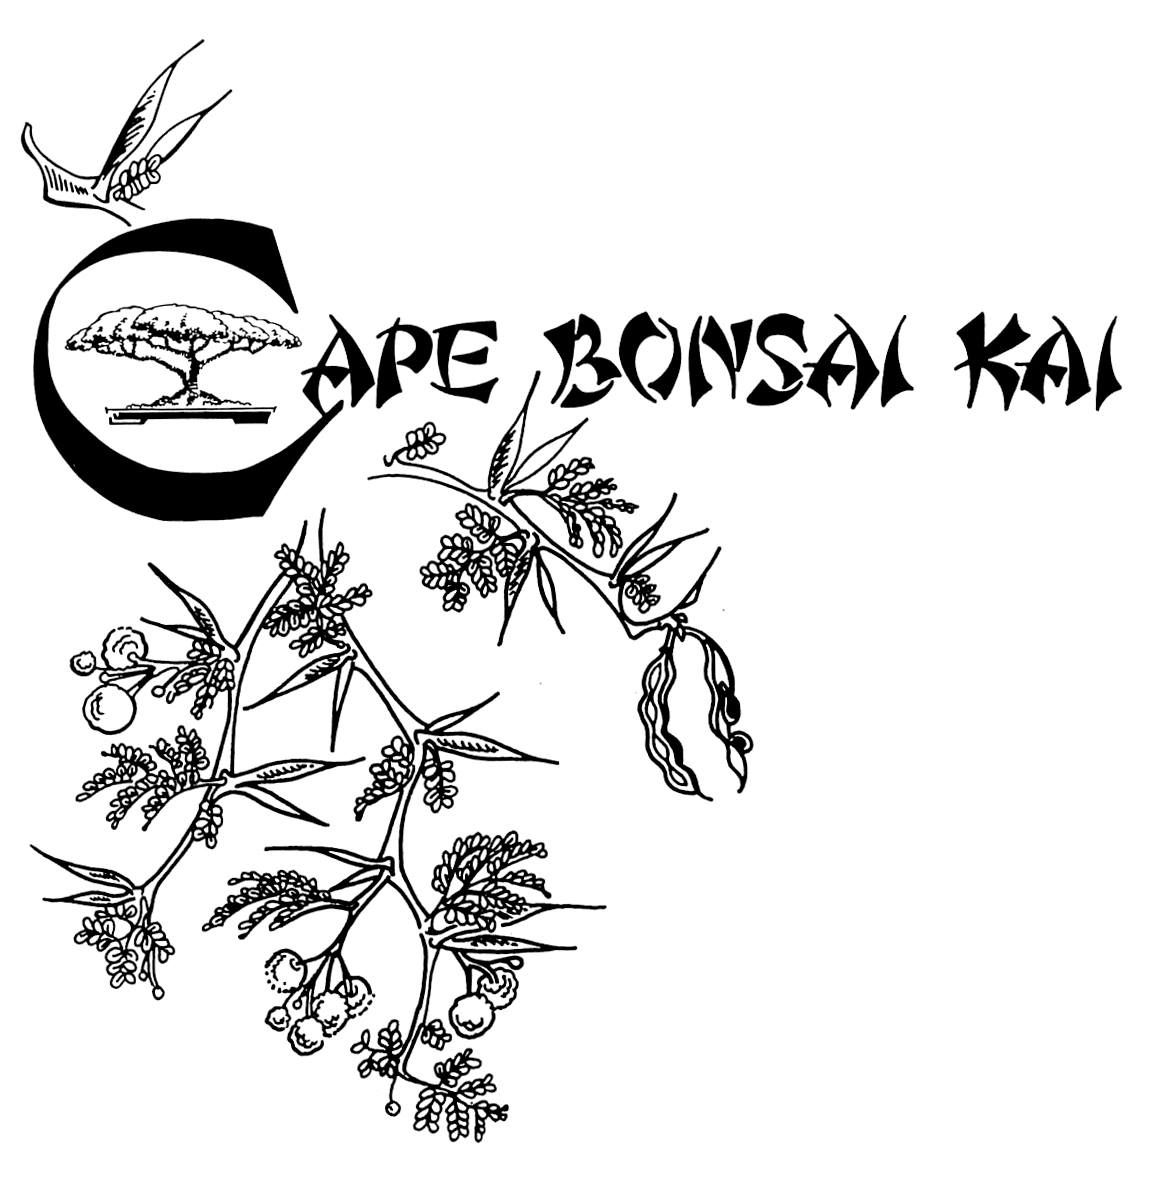 Cape Bonsai Kai workshop